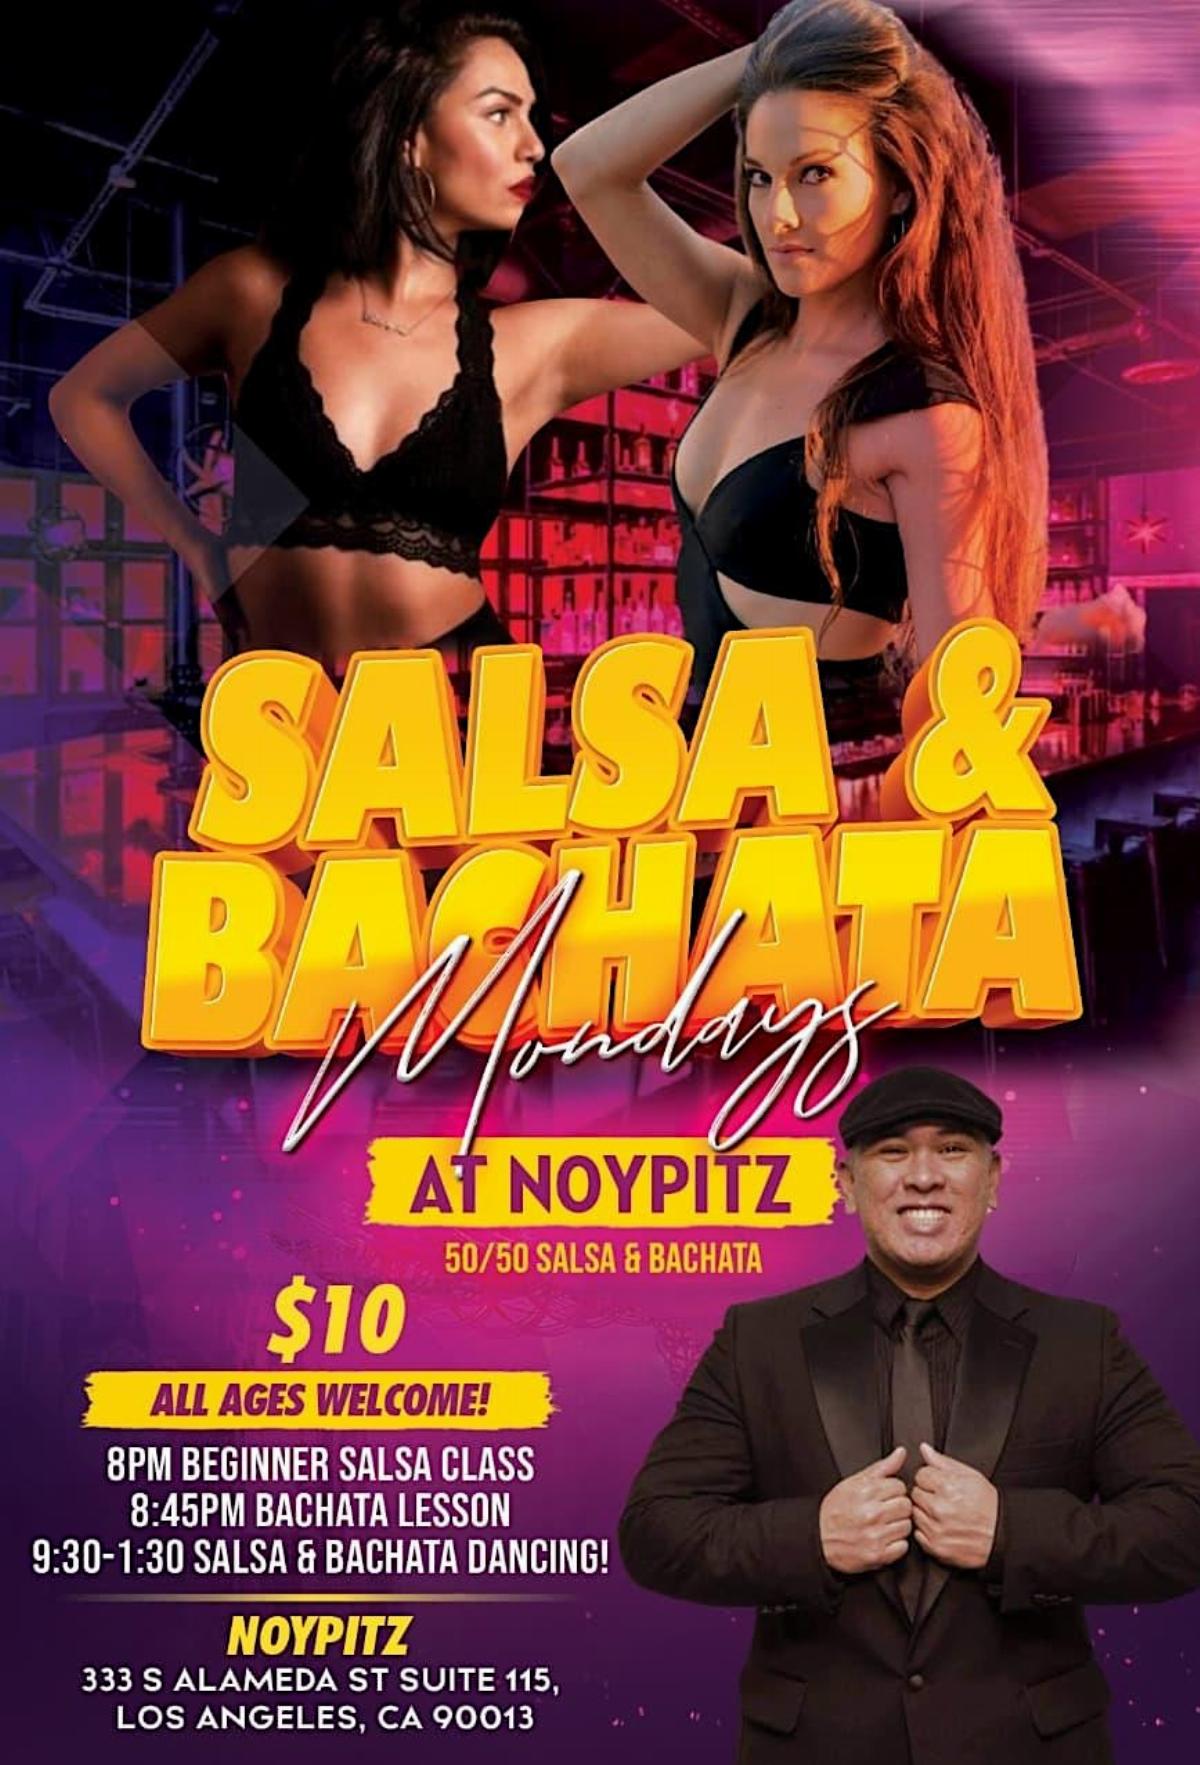 Salsa & Bachata Night at Noypitz in DTLA